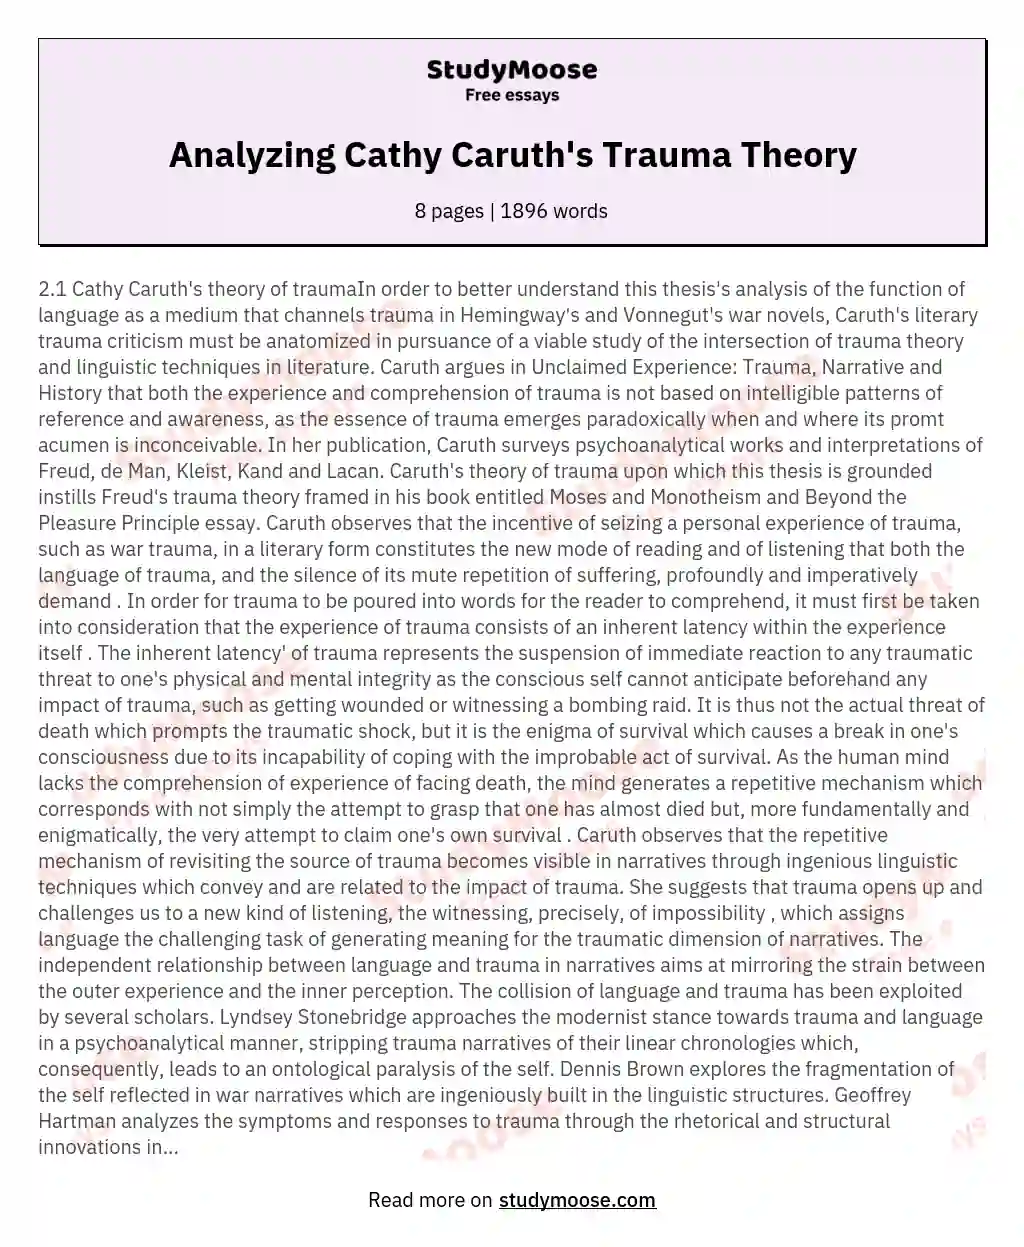 Analyzing Cathy Caruth's Trauma Theory essay